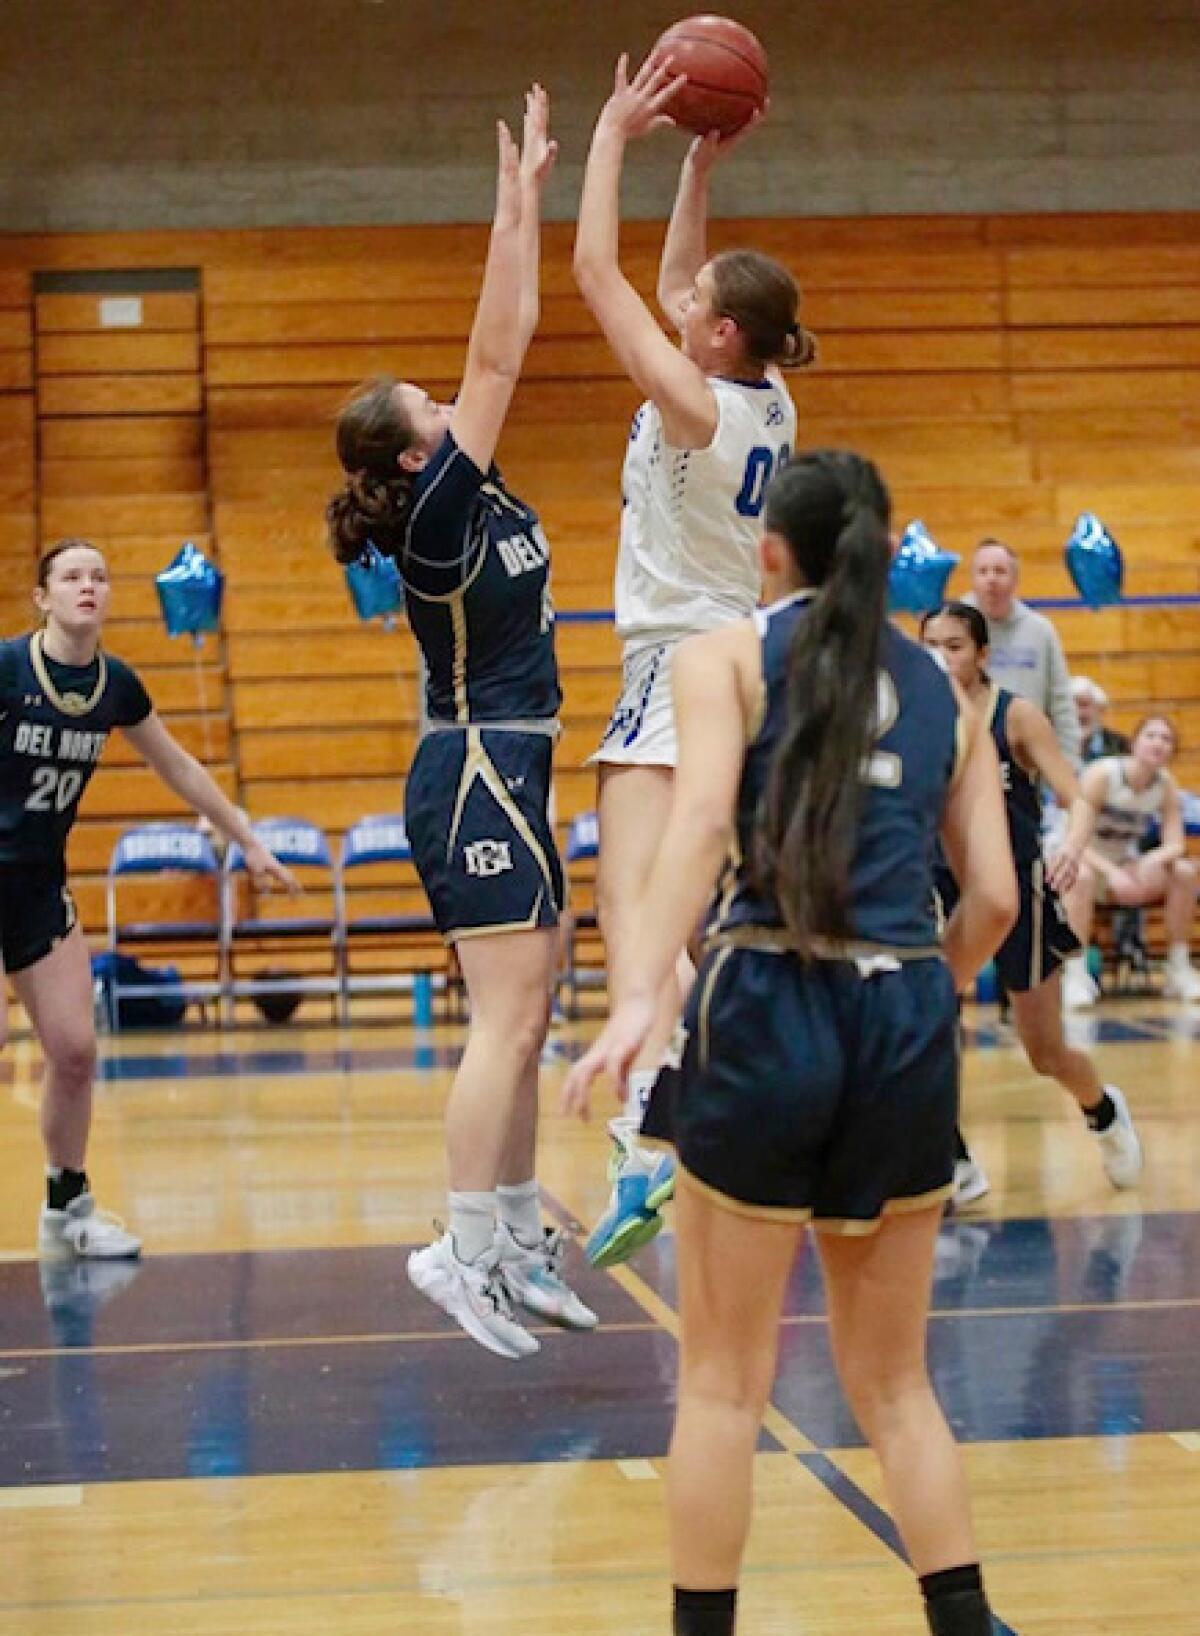 Abigail Lesagonicz aims for the basket in a Rancho Bernardo High vs. Del Norte High basketball game.